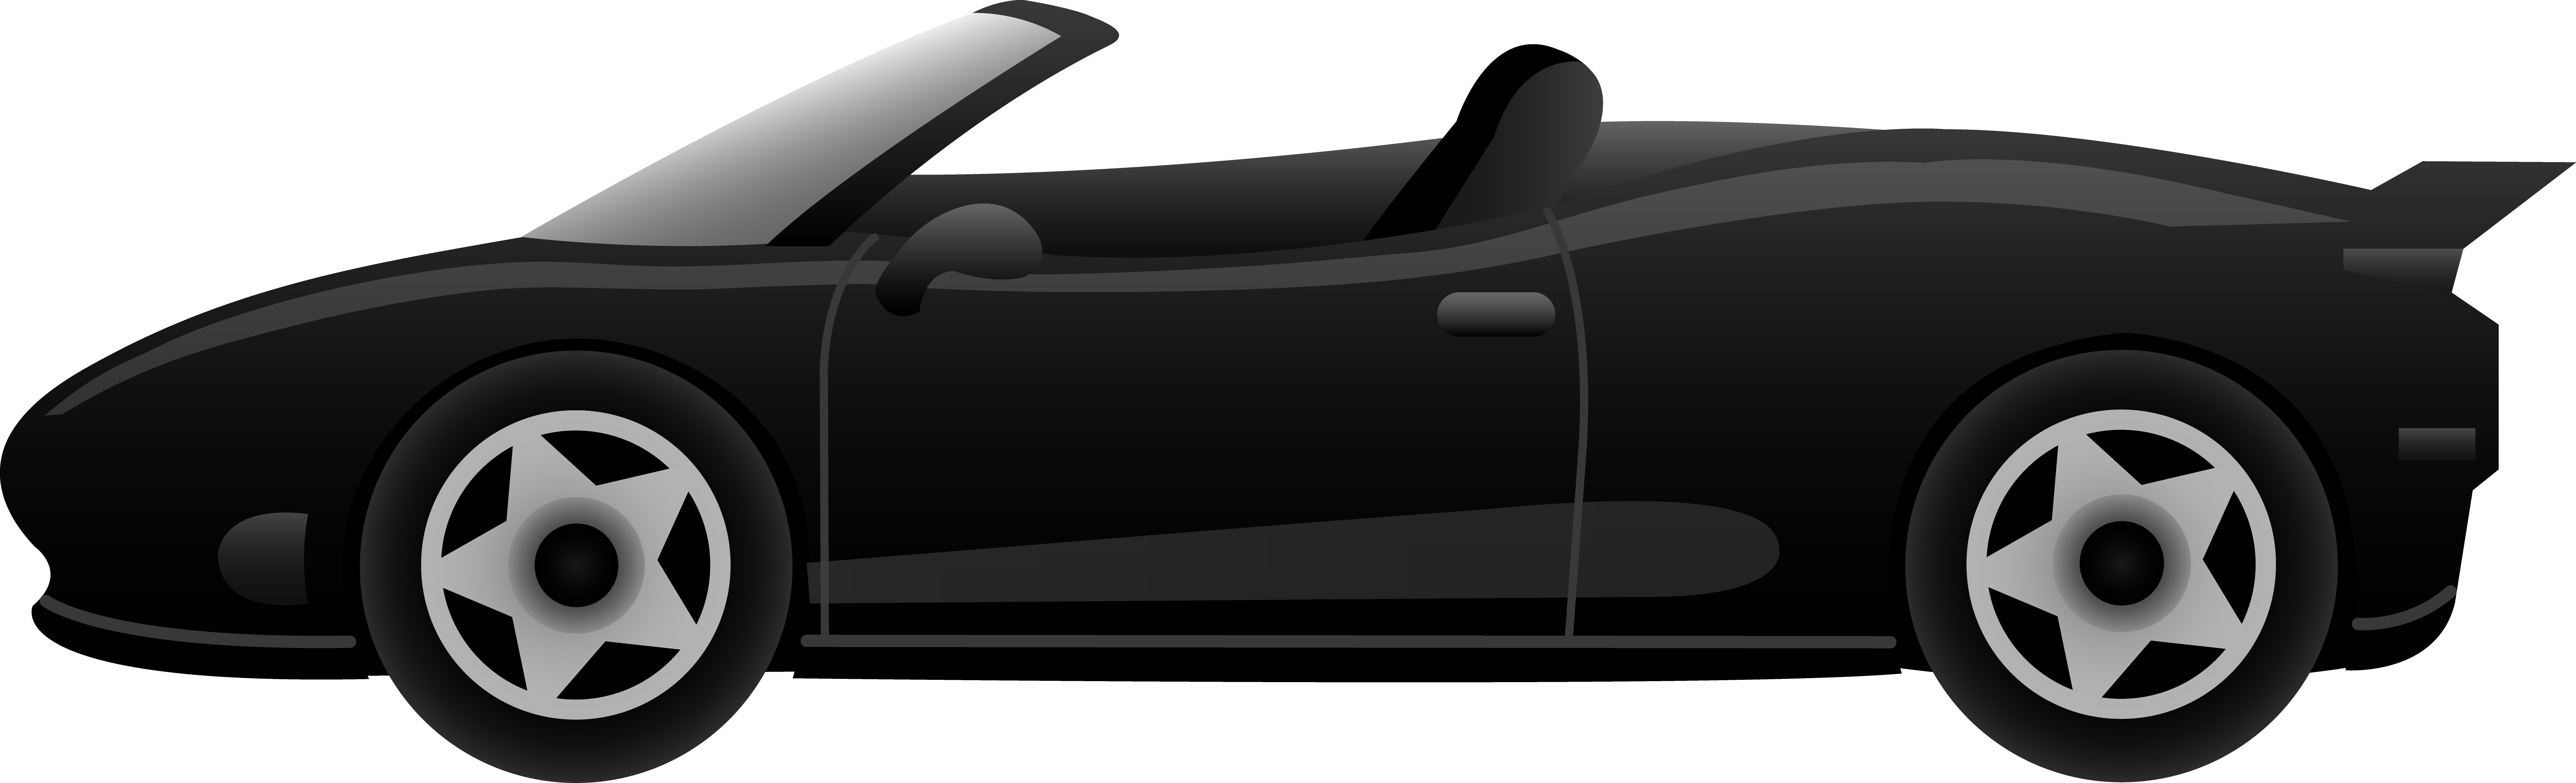 Black race car clipart